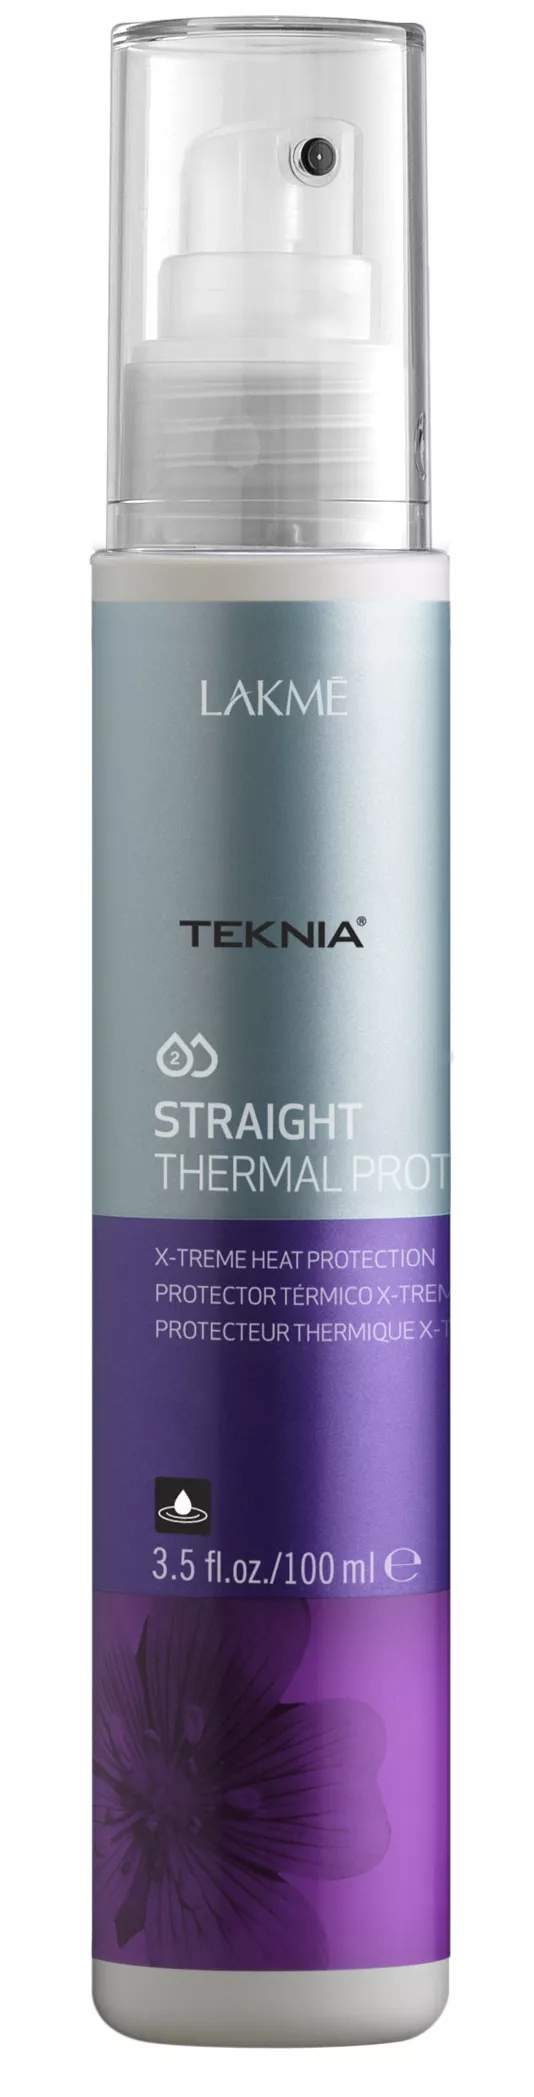 LAKME TEKNIA Straight Thermal Protector, Spray protectie termica, 100 ml